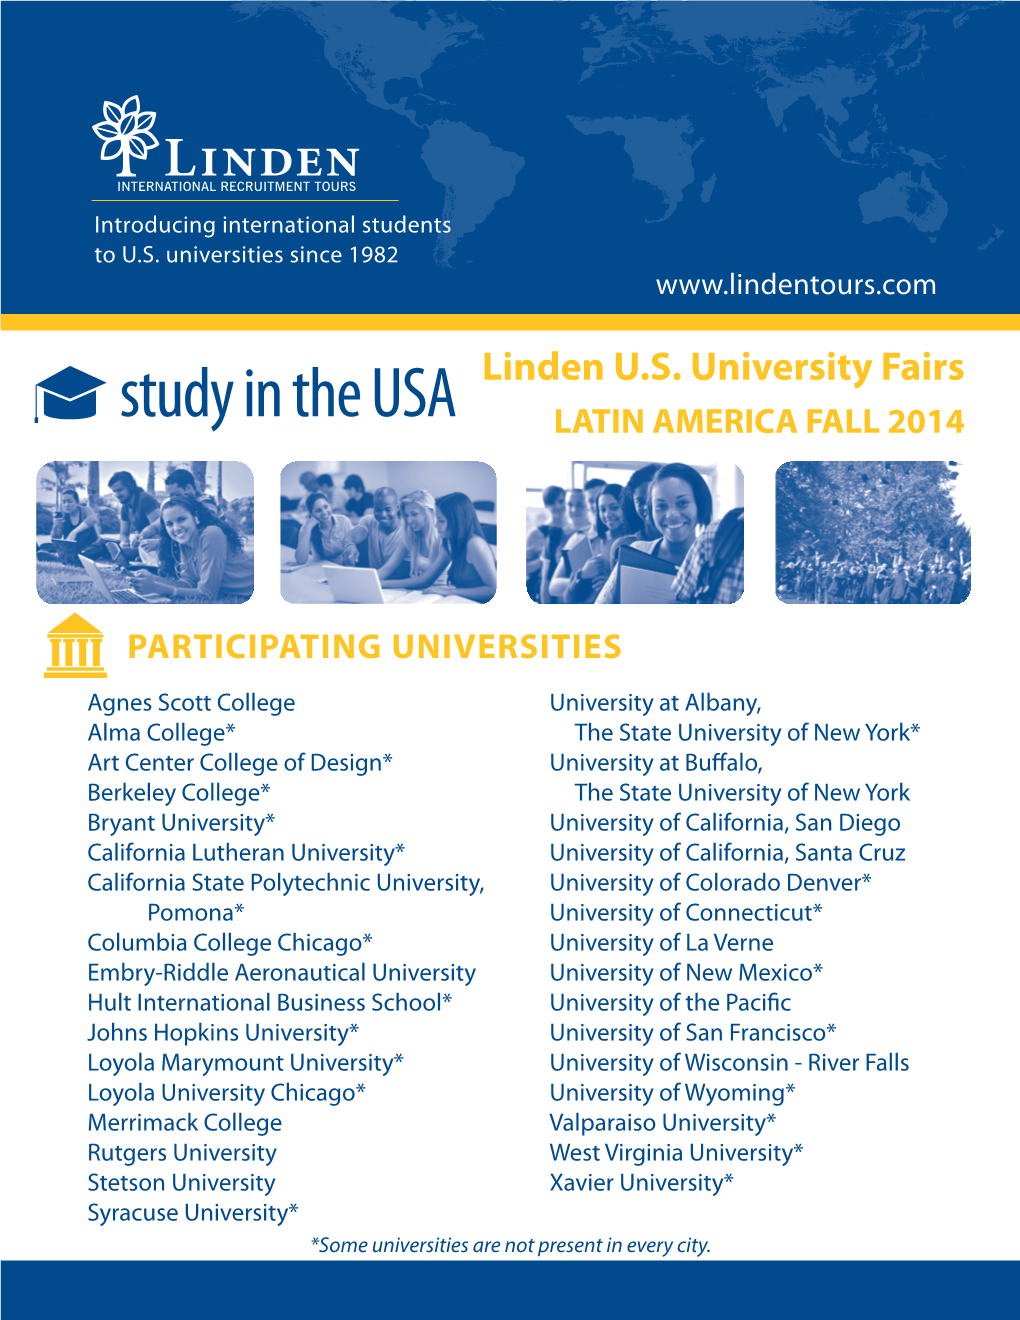 Linden U.S. University Fairs LATIN AMERICA FALL 2014